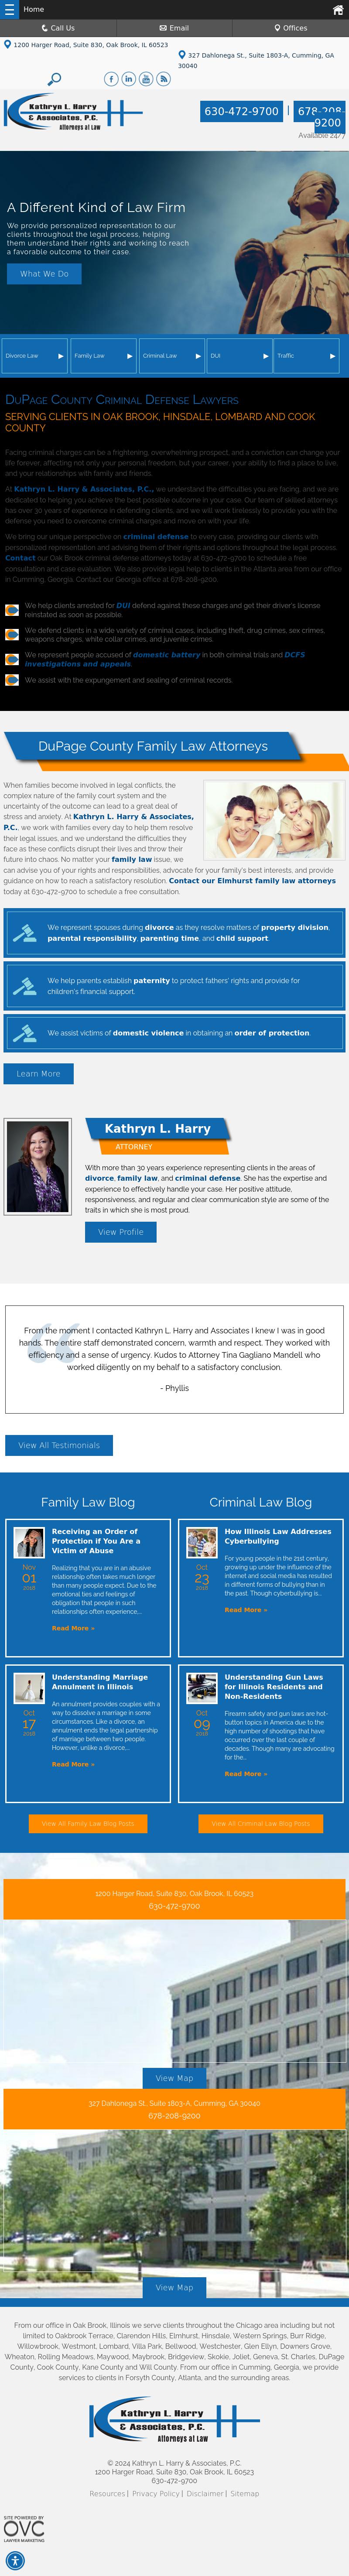 Kathryn L. Harry & Associates, P.C. - Oak Brook IL Lawyers